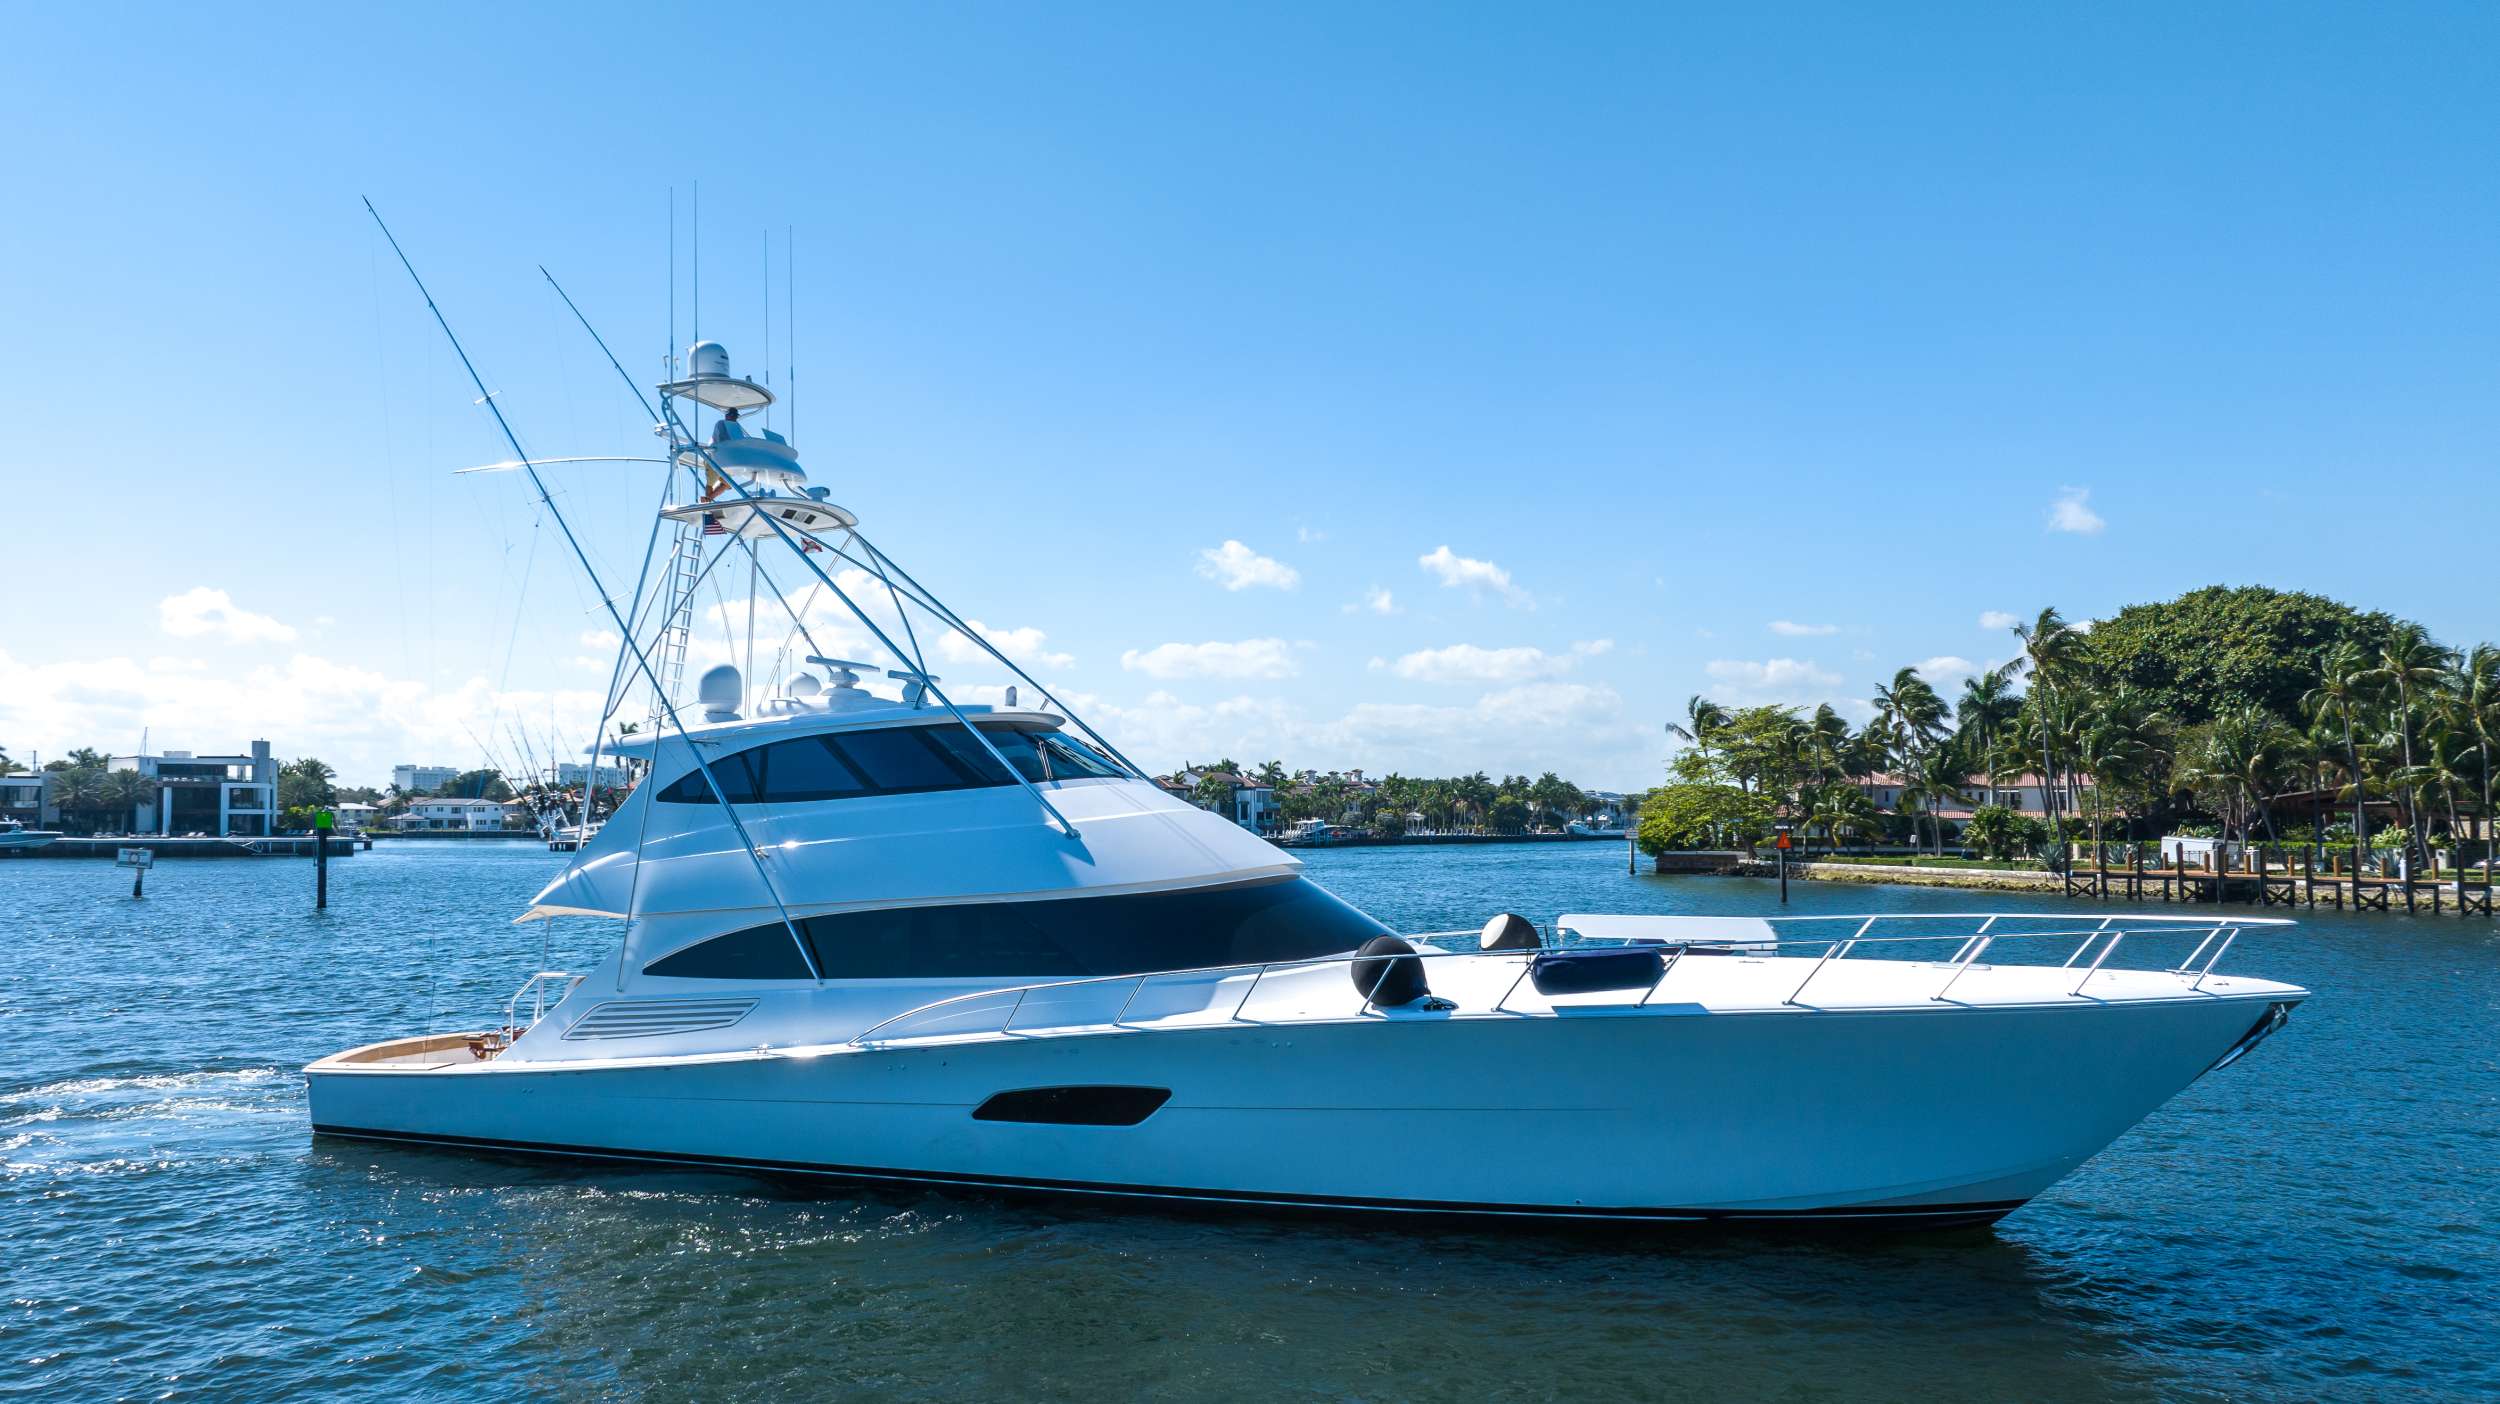 Astrikos - Motor Boat Charter USA & Boat hire in Florida & Bahamas 1